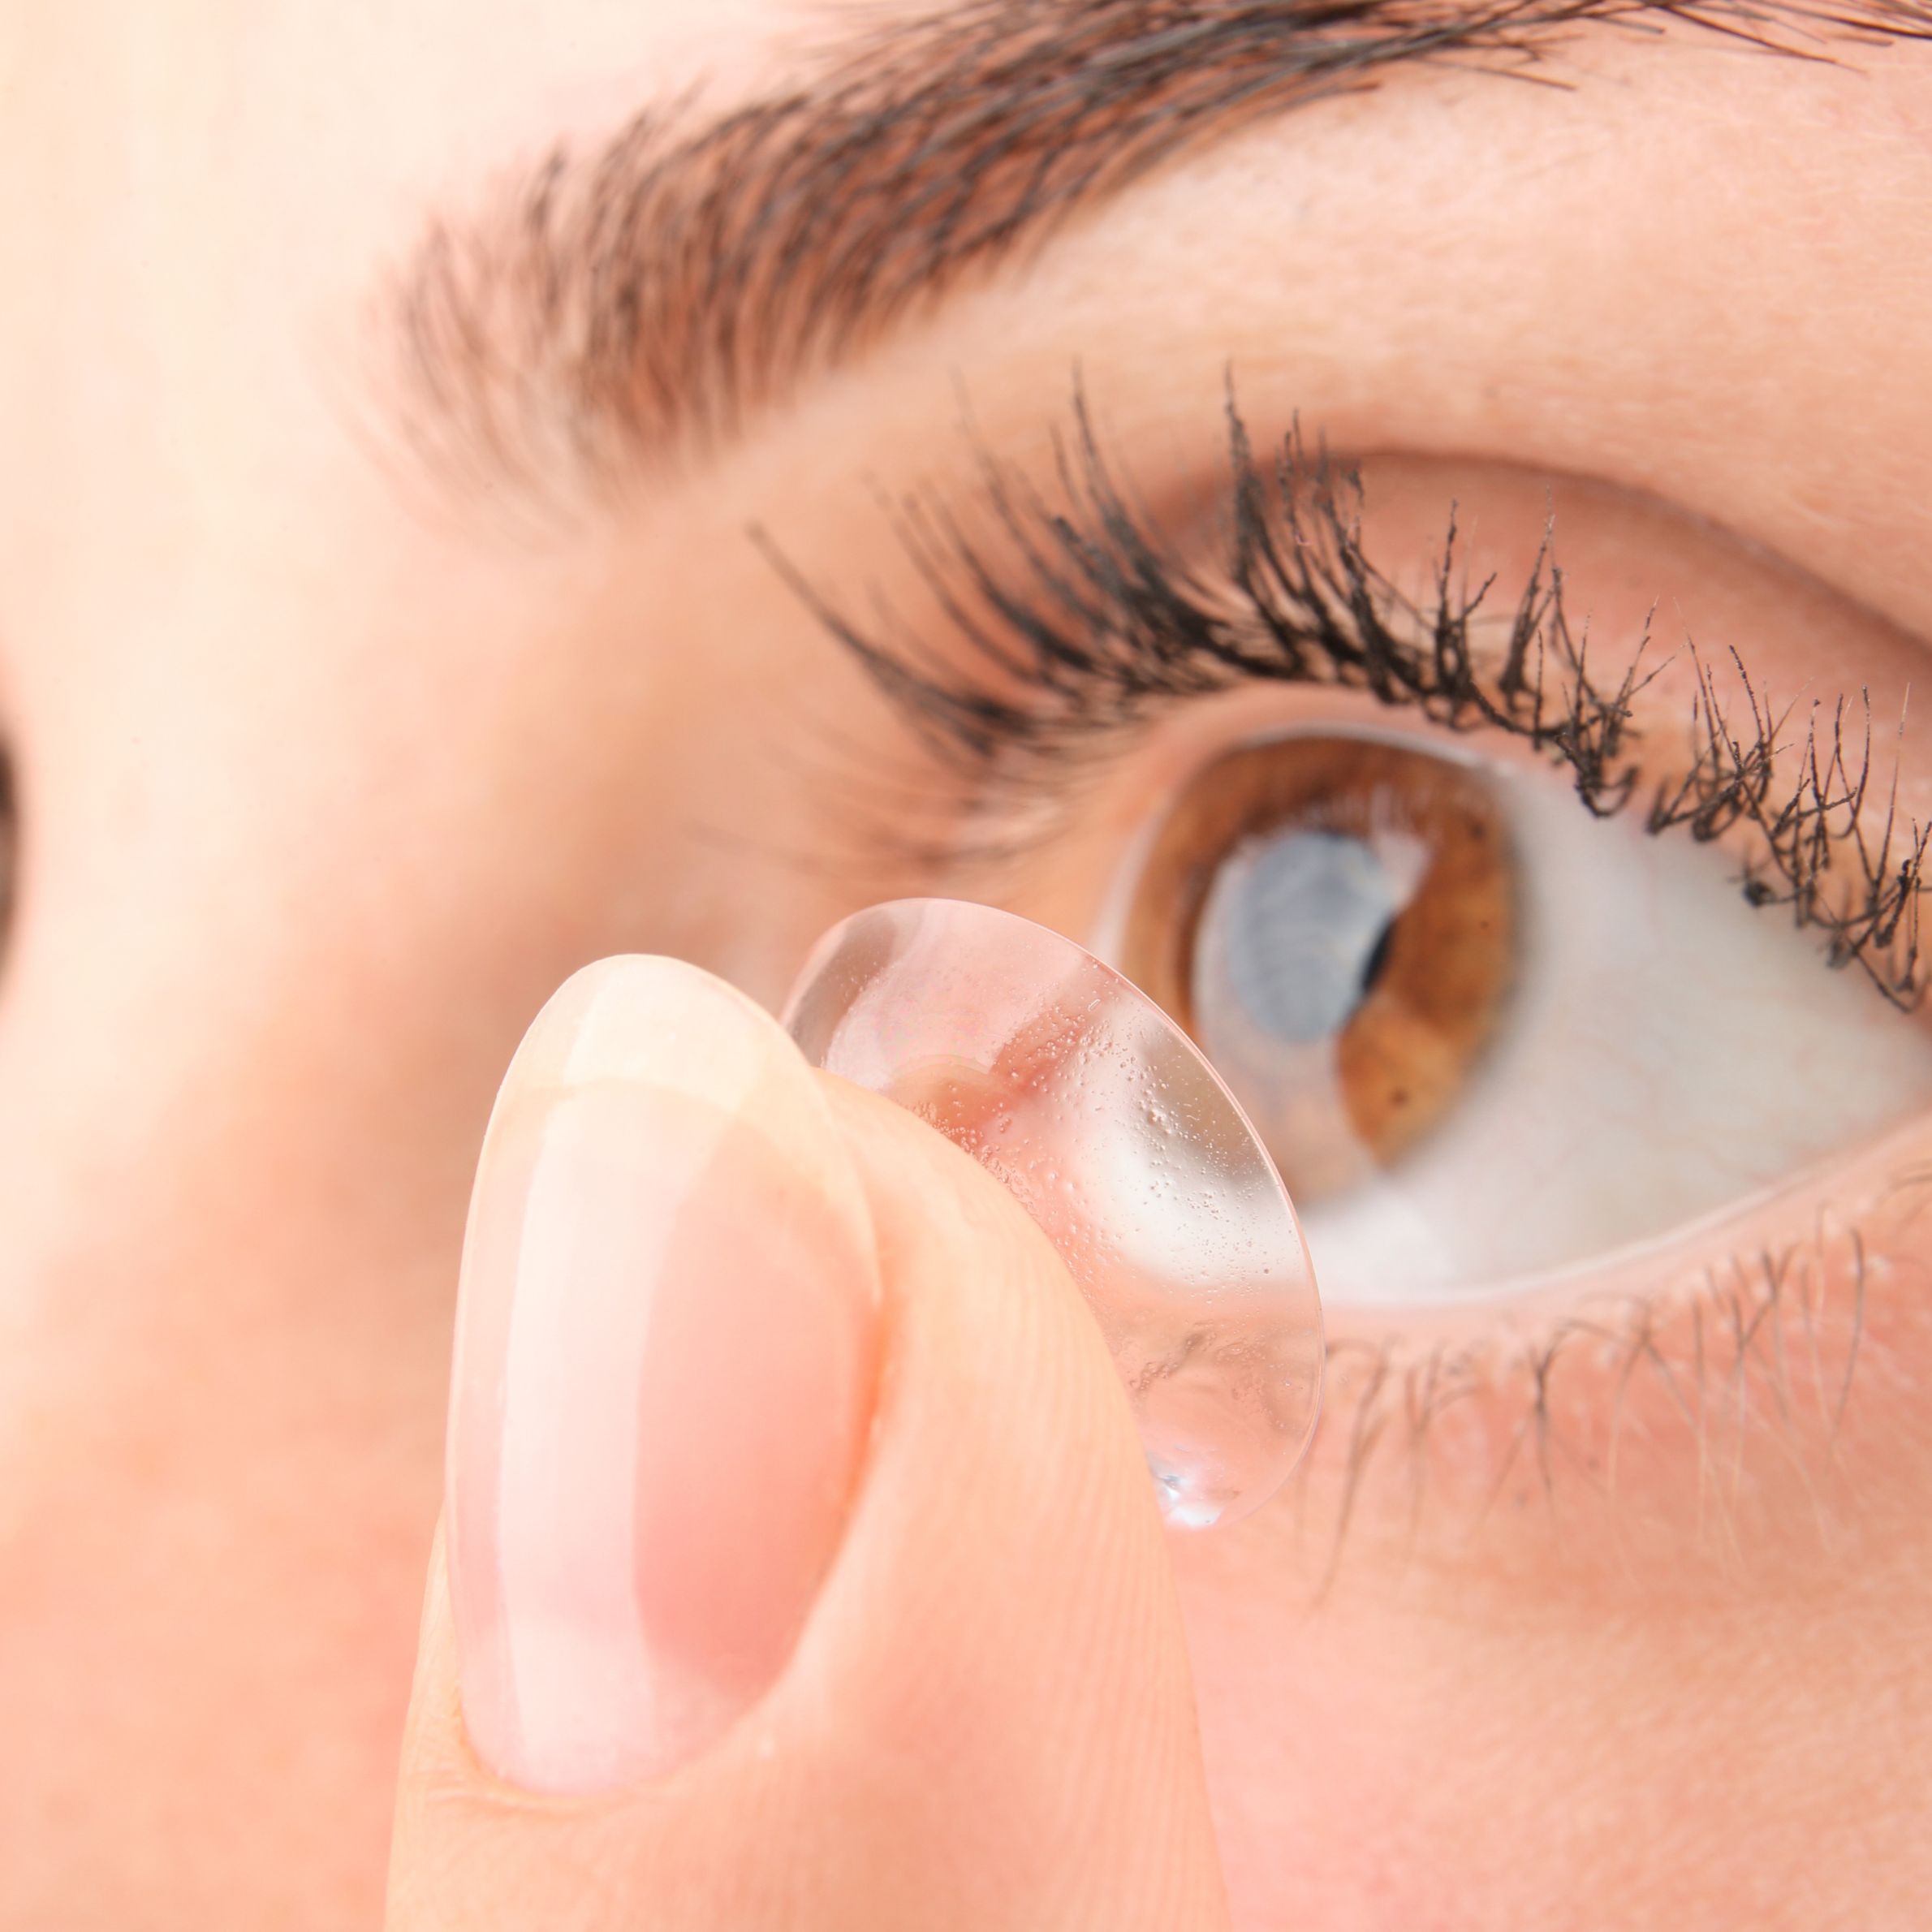 Best eye vitamins for blurry vision